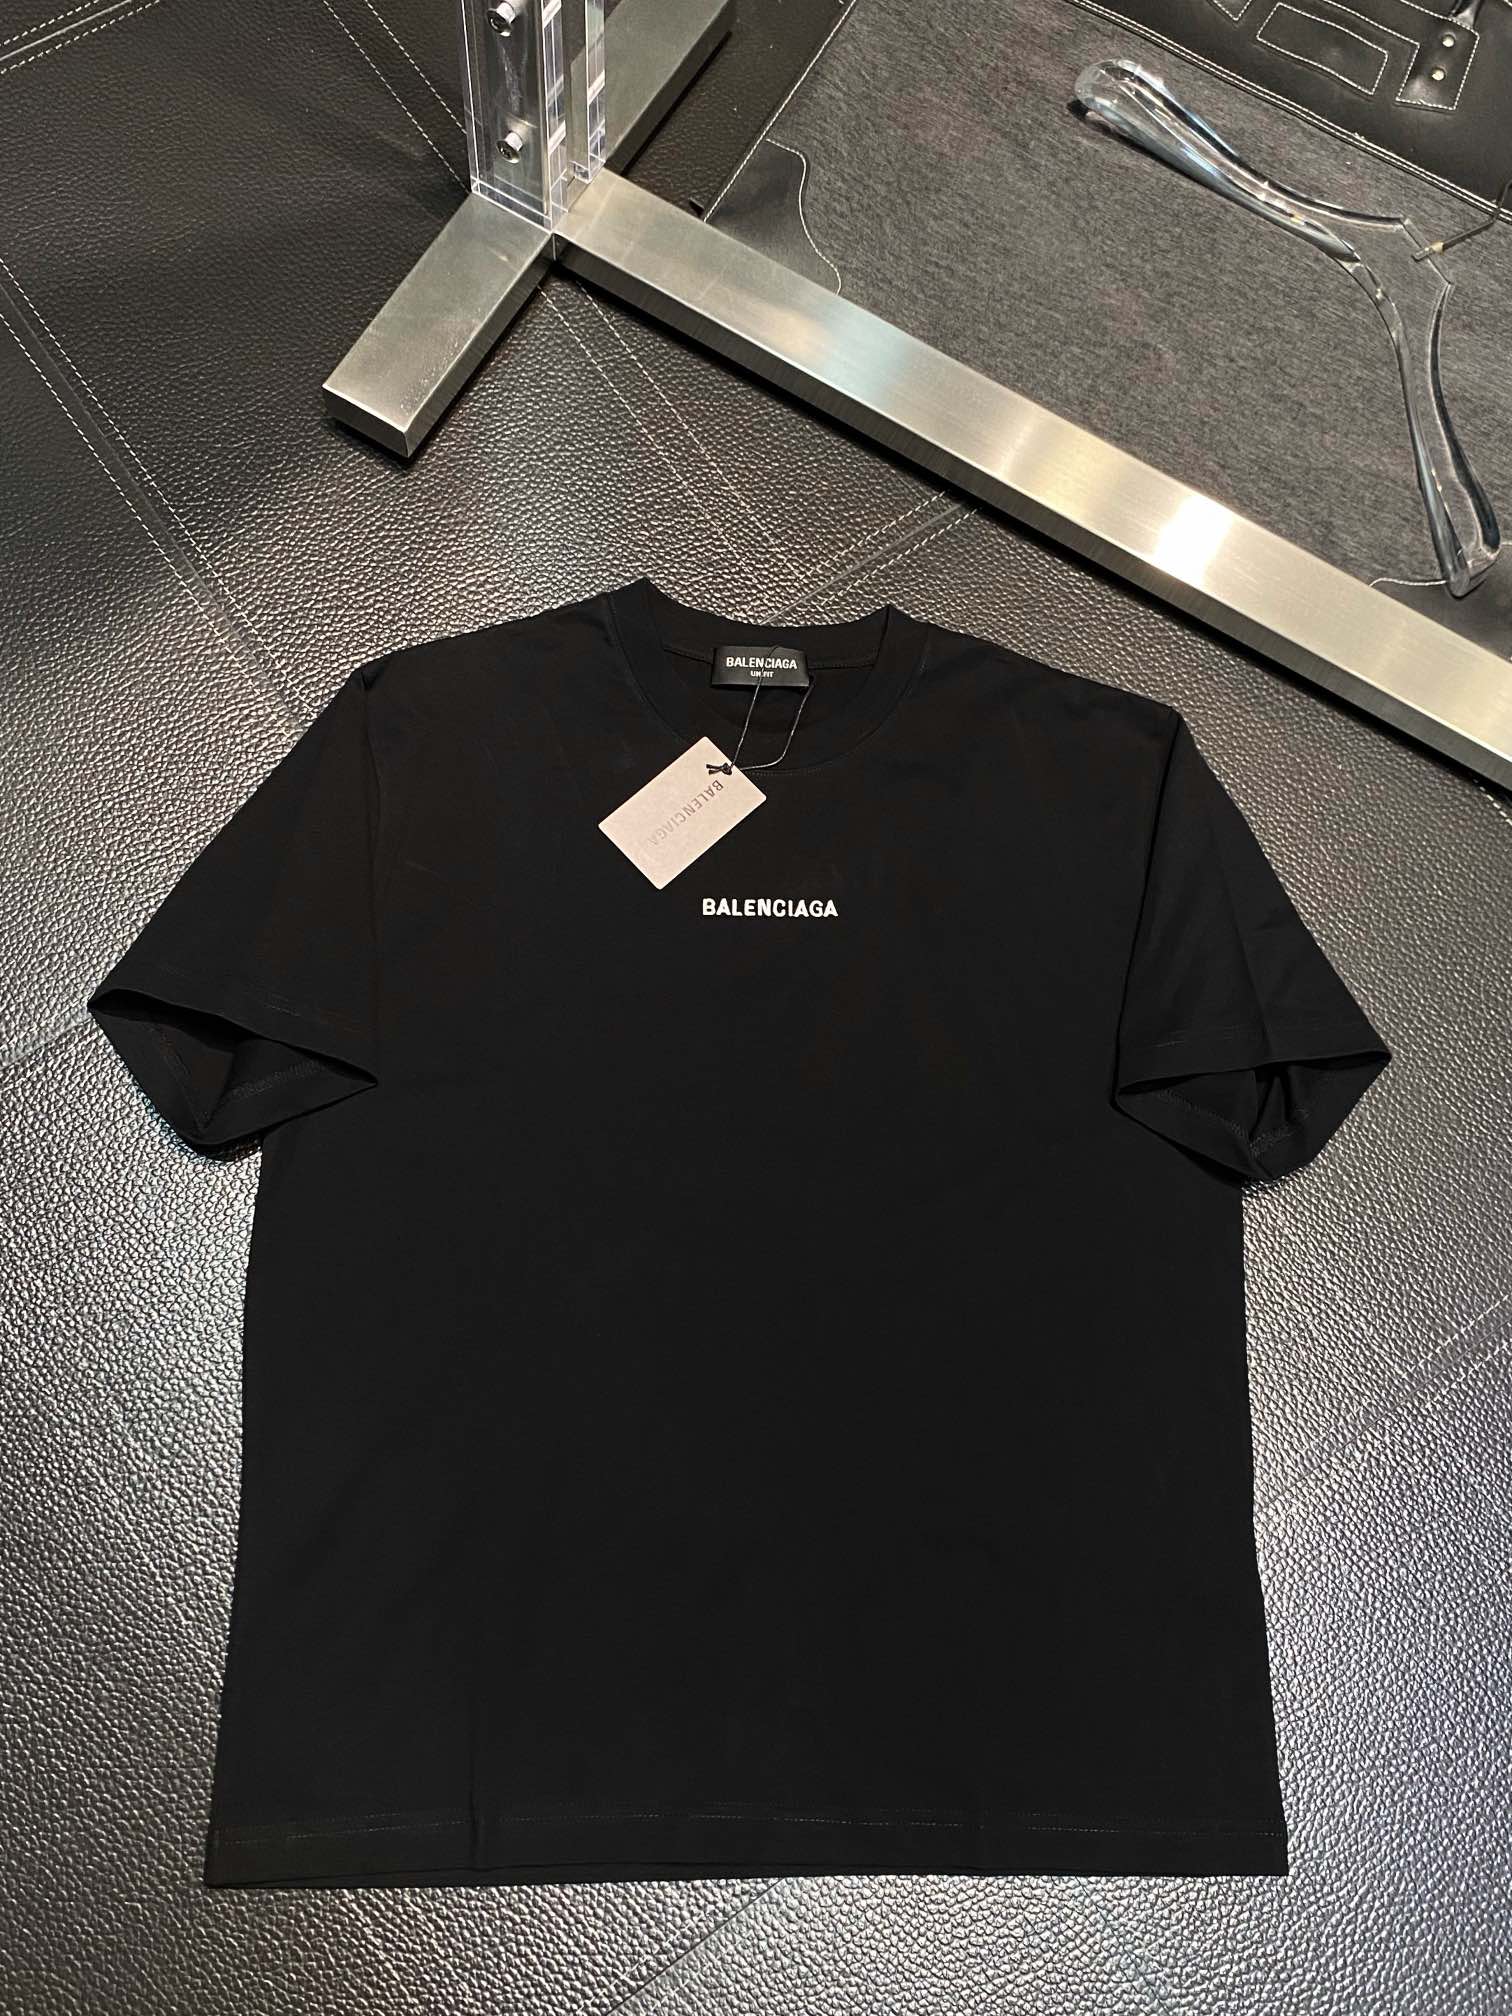 Balenciaga Clothing T-Shirt for sale online
 Men Fashion Short Sleeve